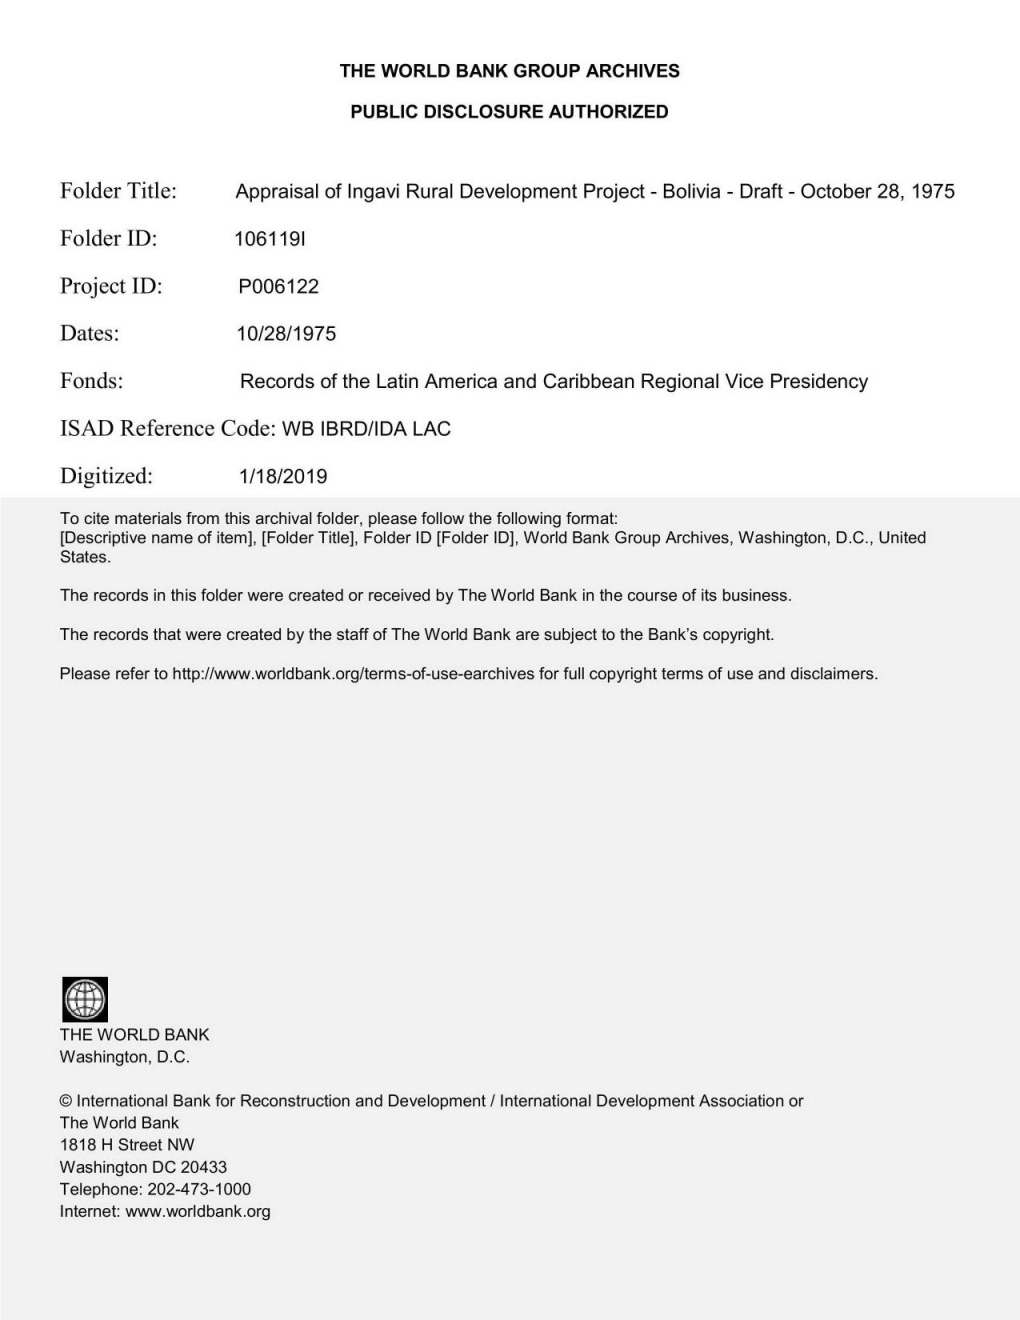 Appraisal of Ingavi Rural Development Project - Bolivia - Draft - October 28, 1975